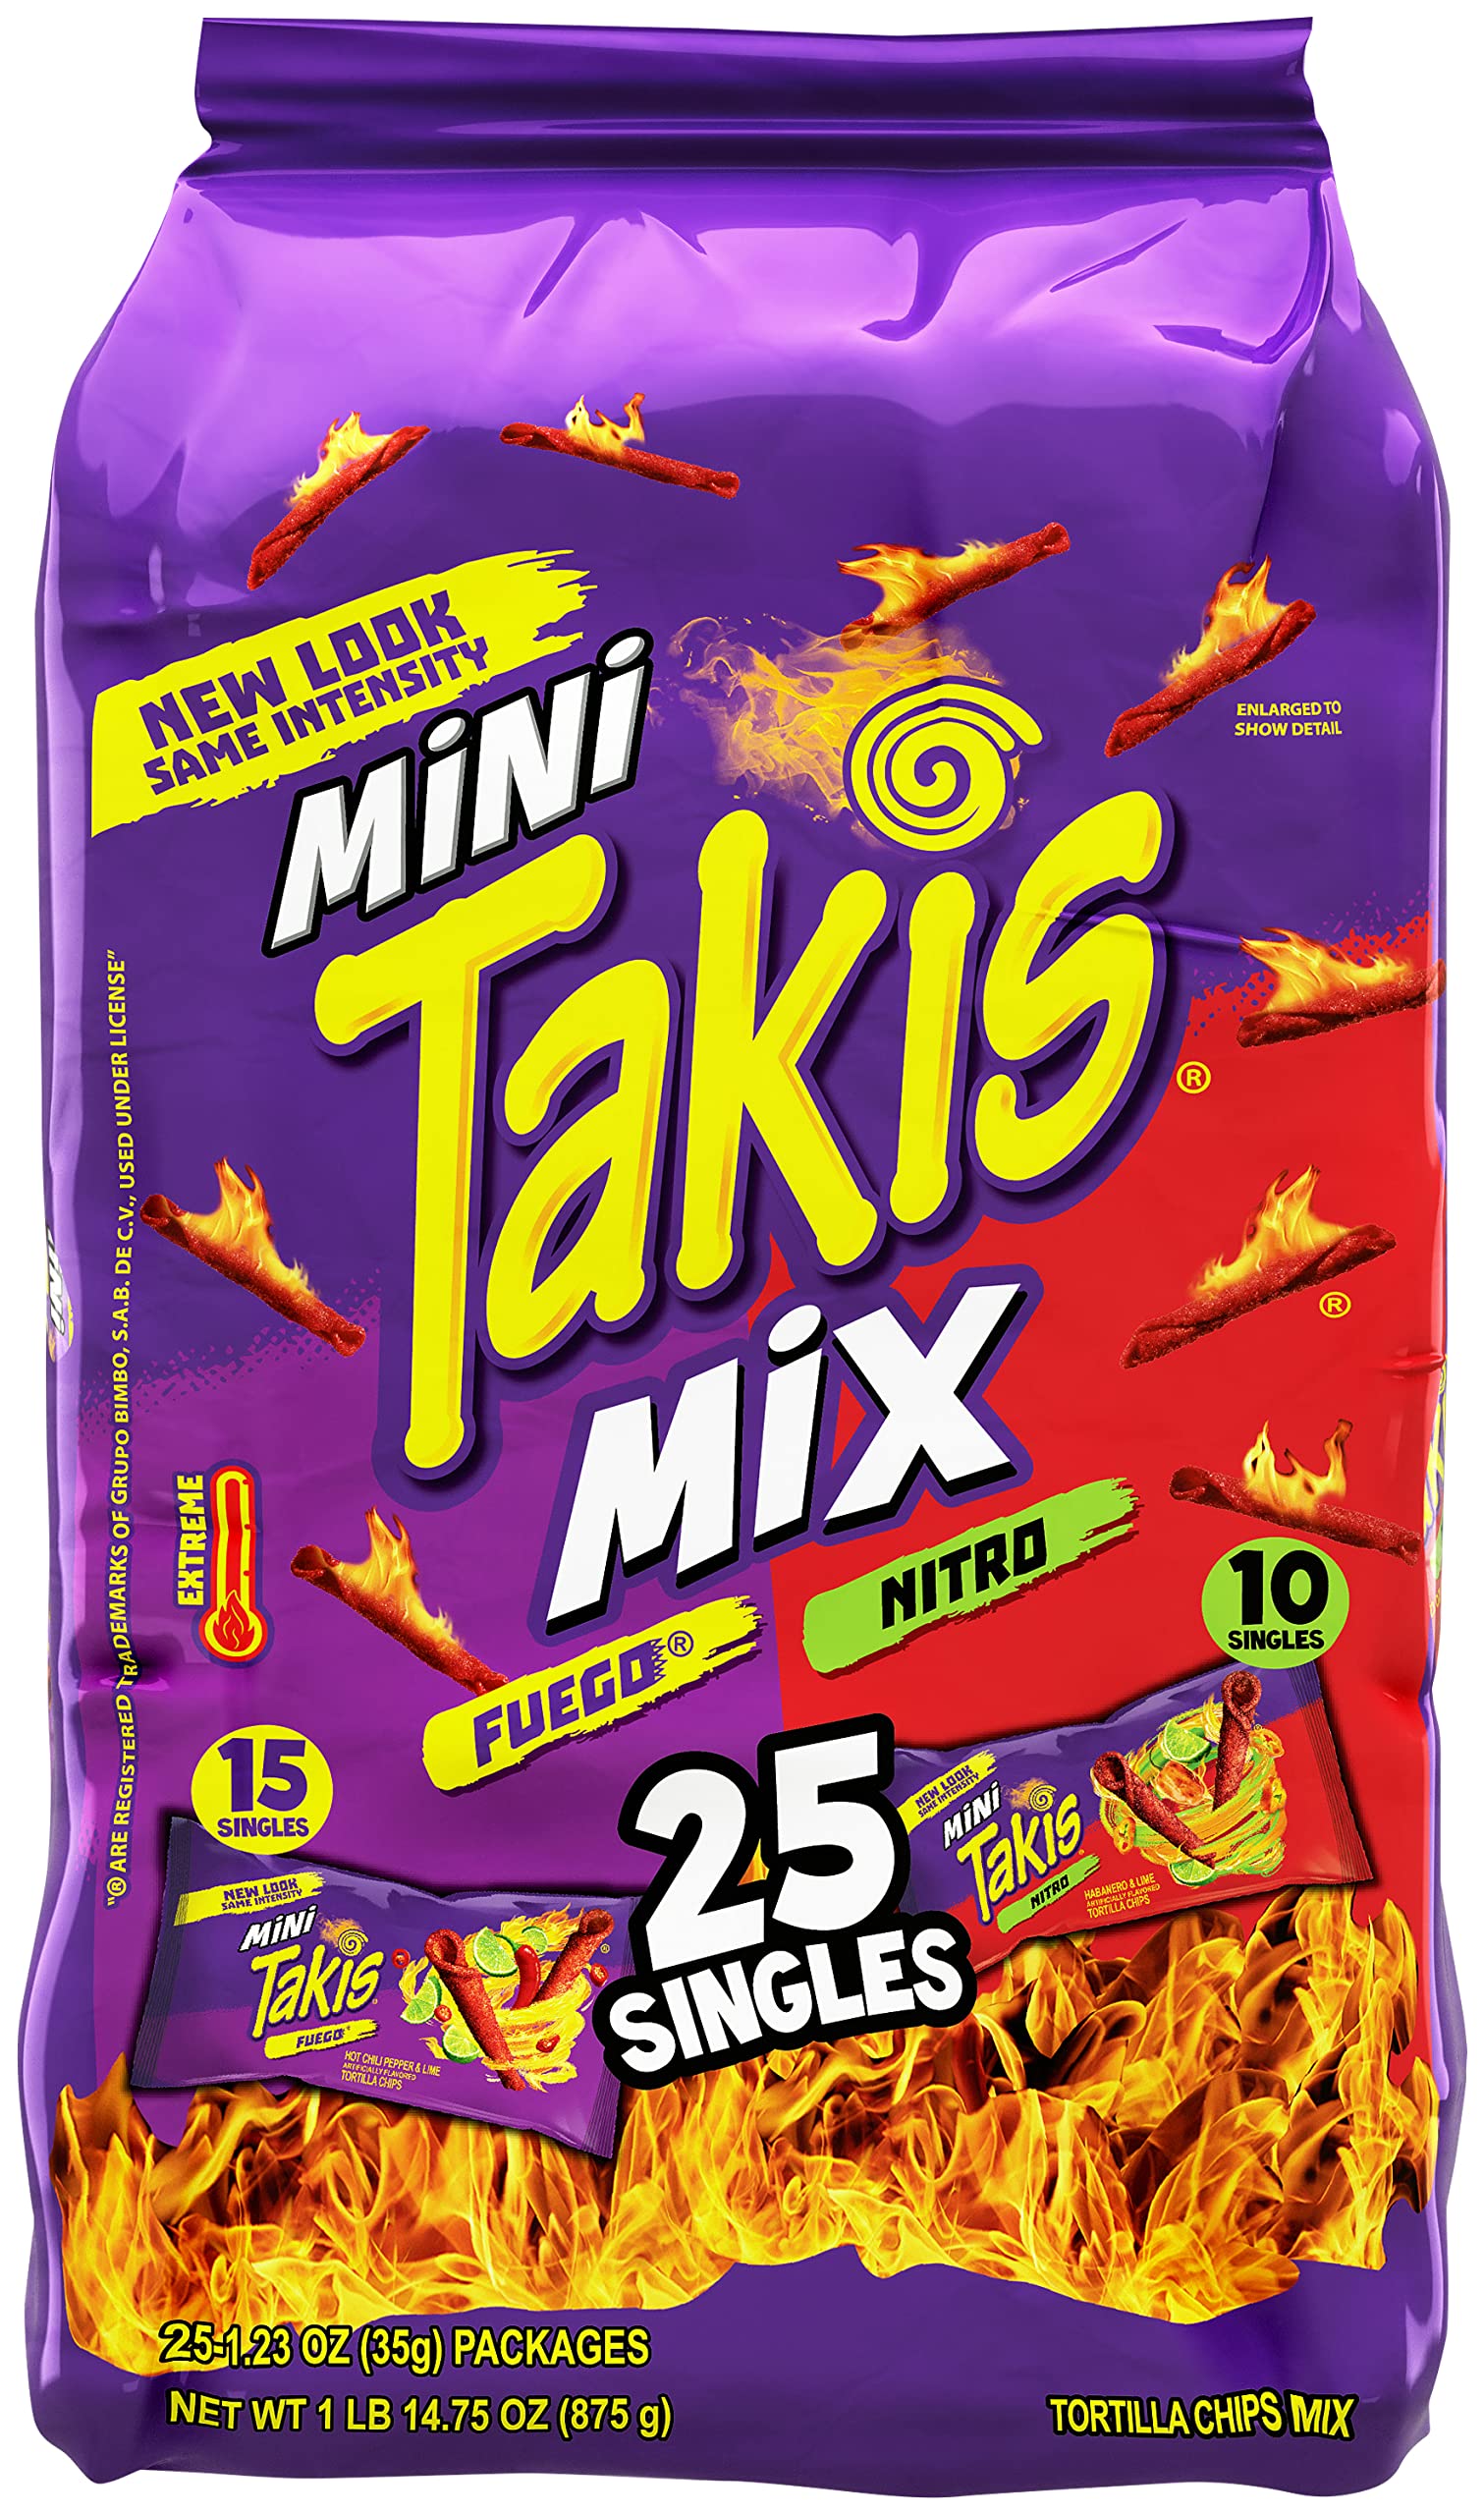 Mini Takis Fuego, Snack Packs, 25 Count